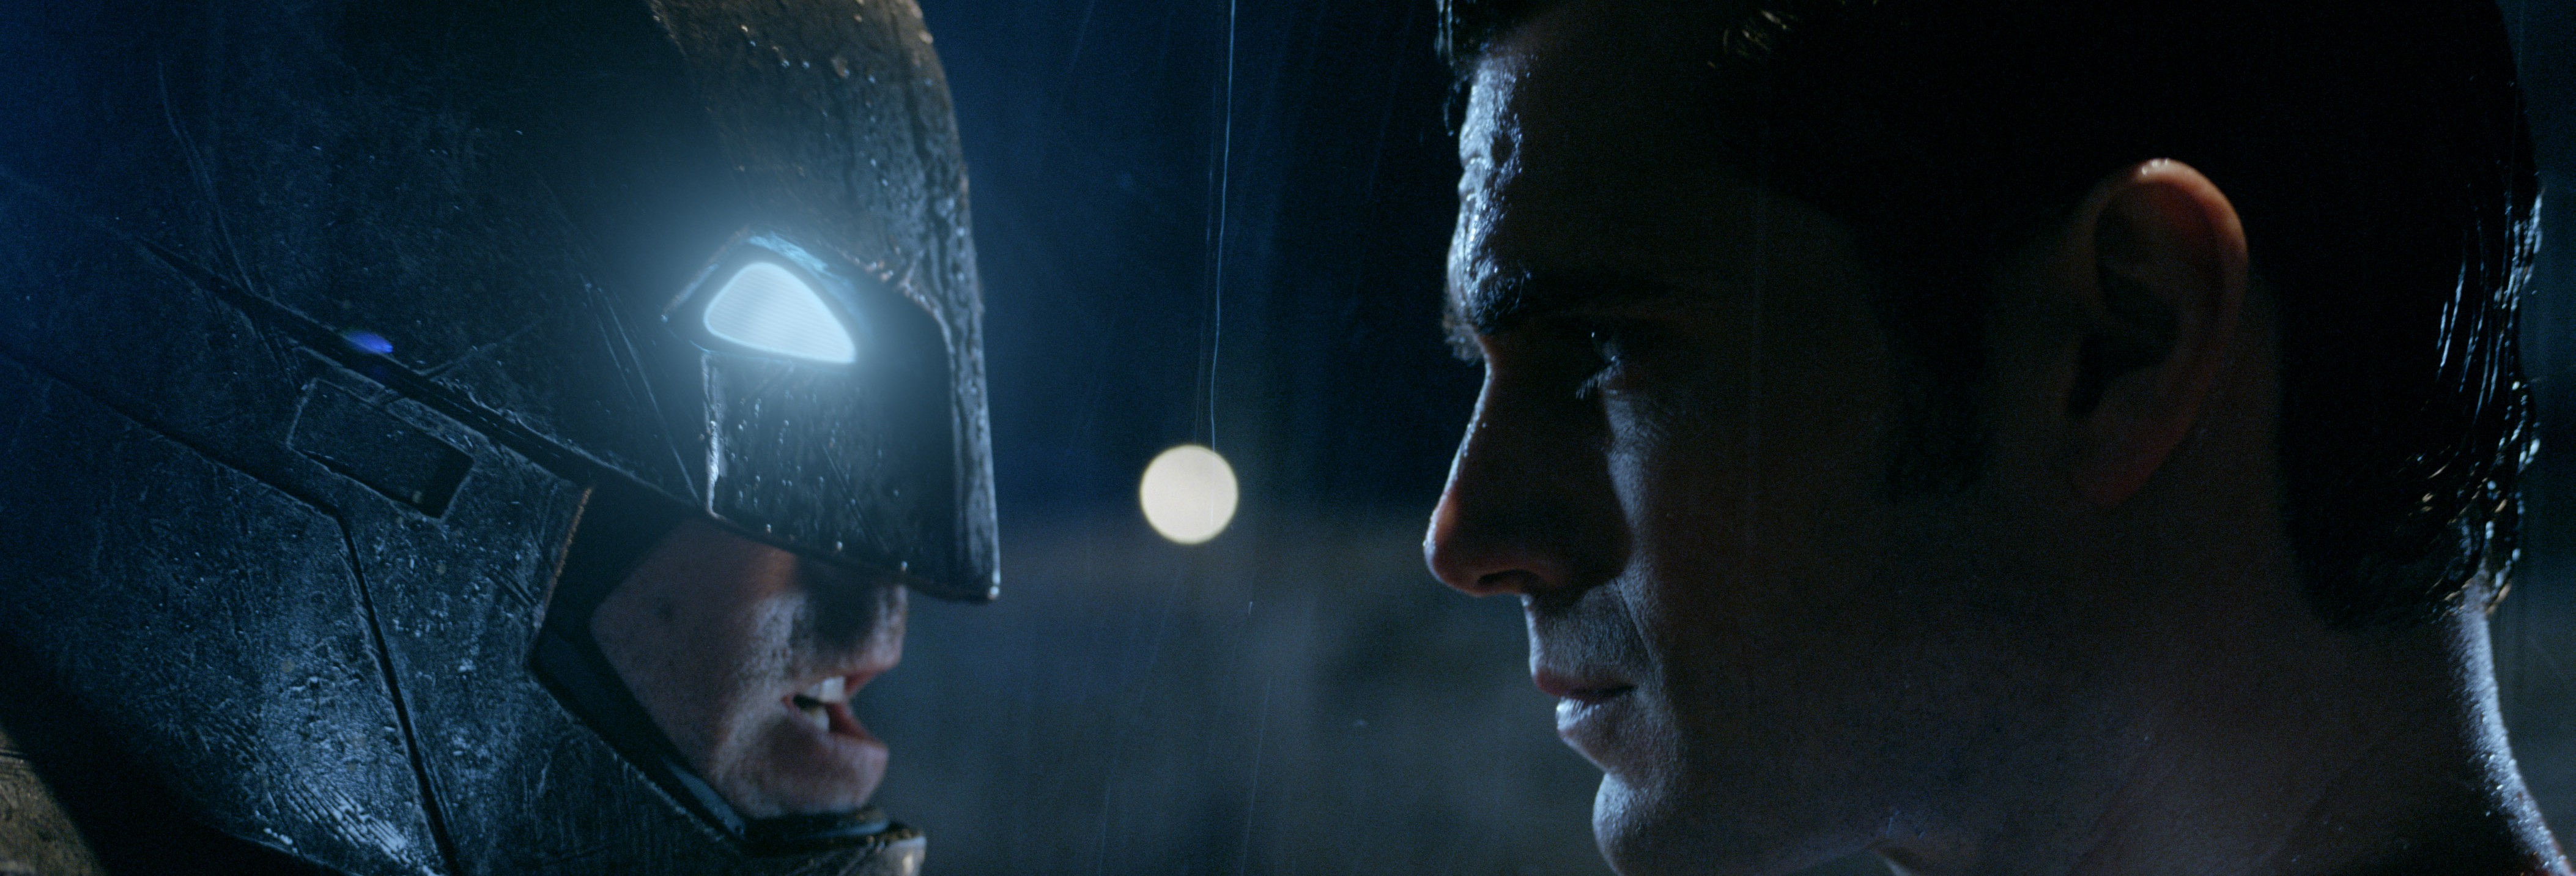 Batman v Superman: Dawn of Justice final trailer